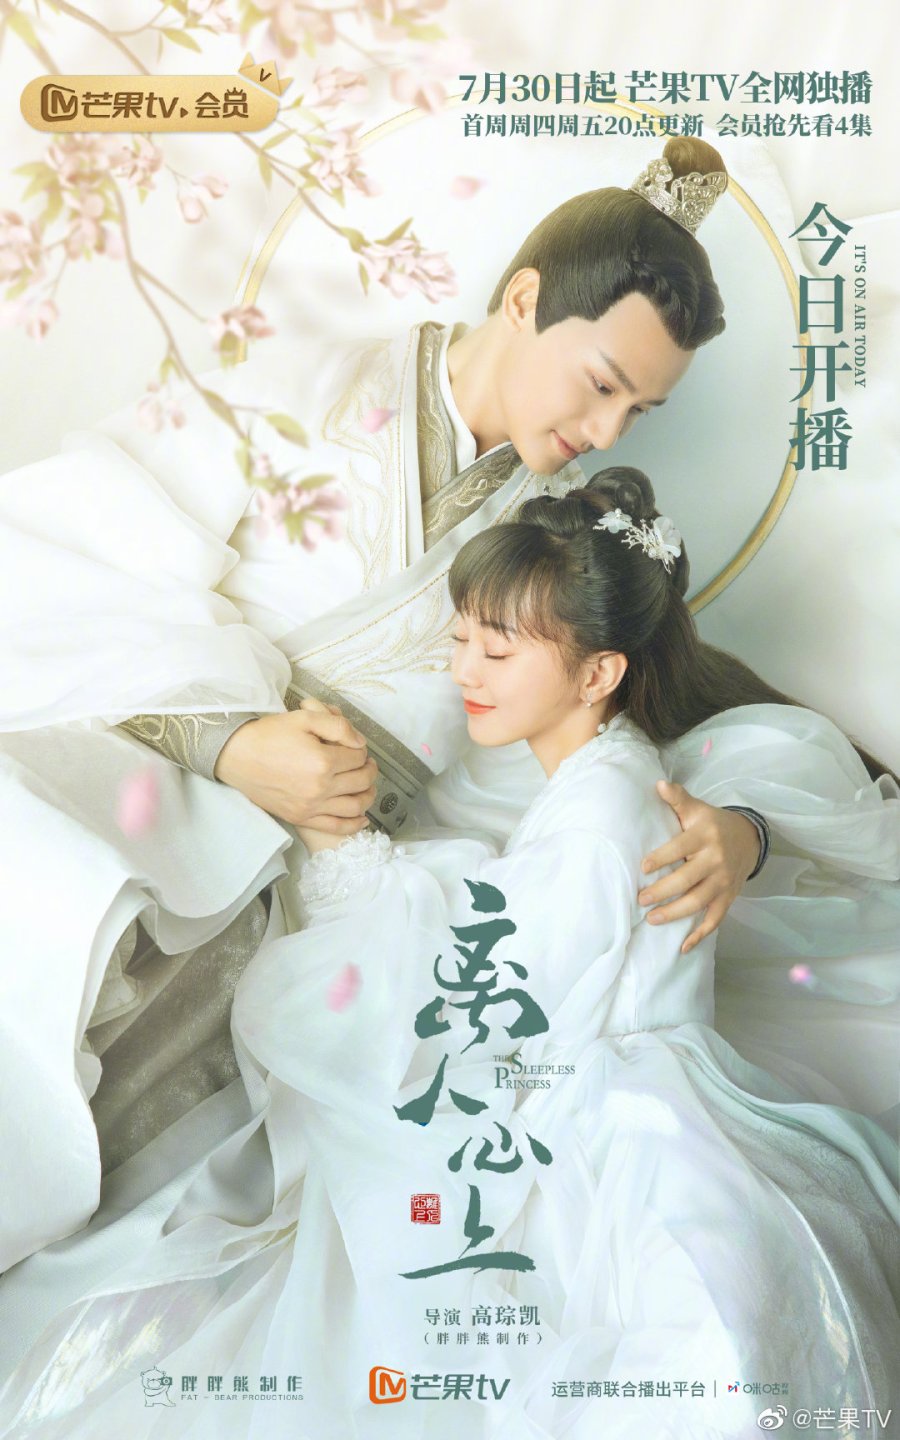 2020 The Sleepless Princess الدراما الصينية "الأميرة التي لا تنام". تقرير عن الدراما. مسلسل الأميرة التي لا تنام الصيني مترجم. مسلسل الأميرة التي لا تنام